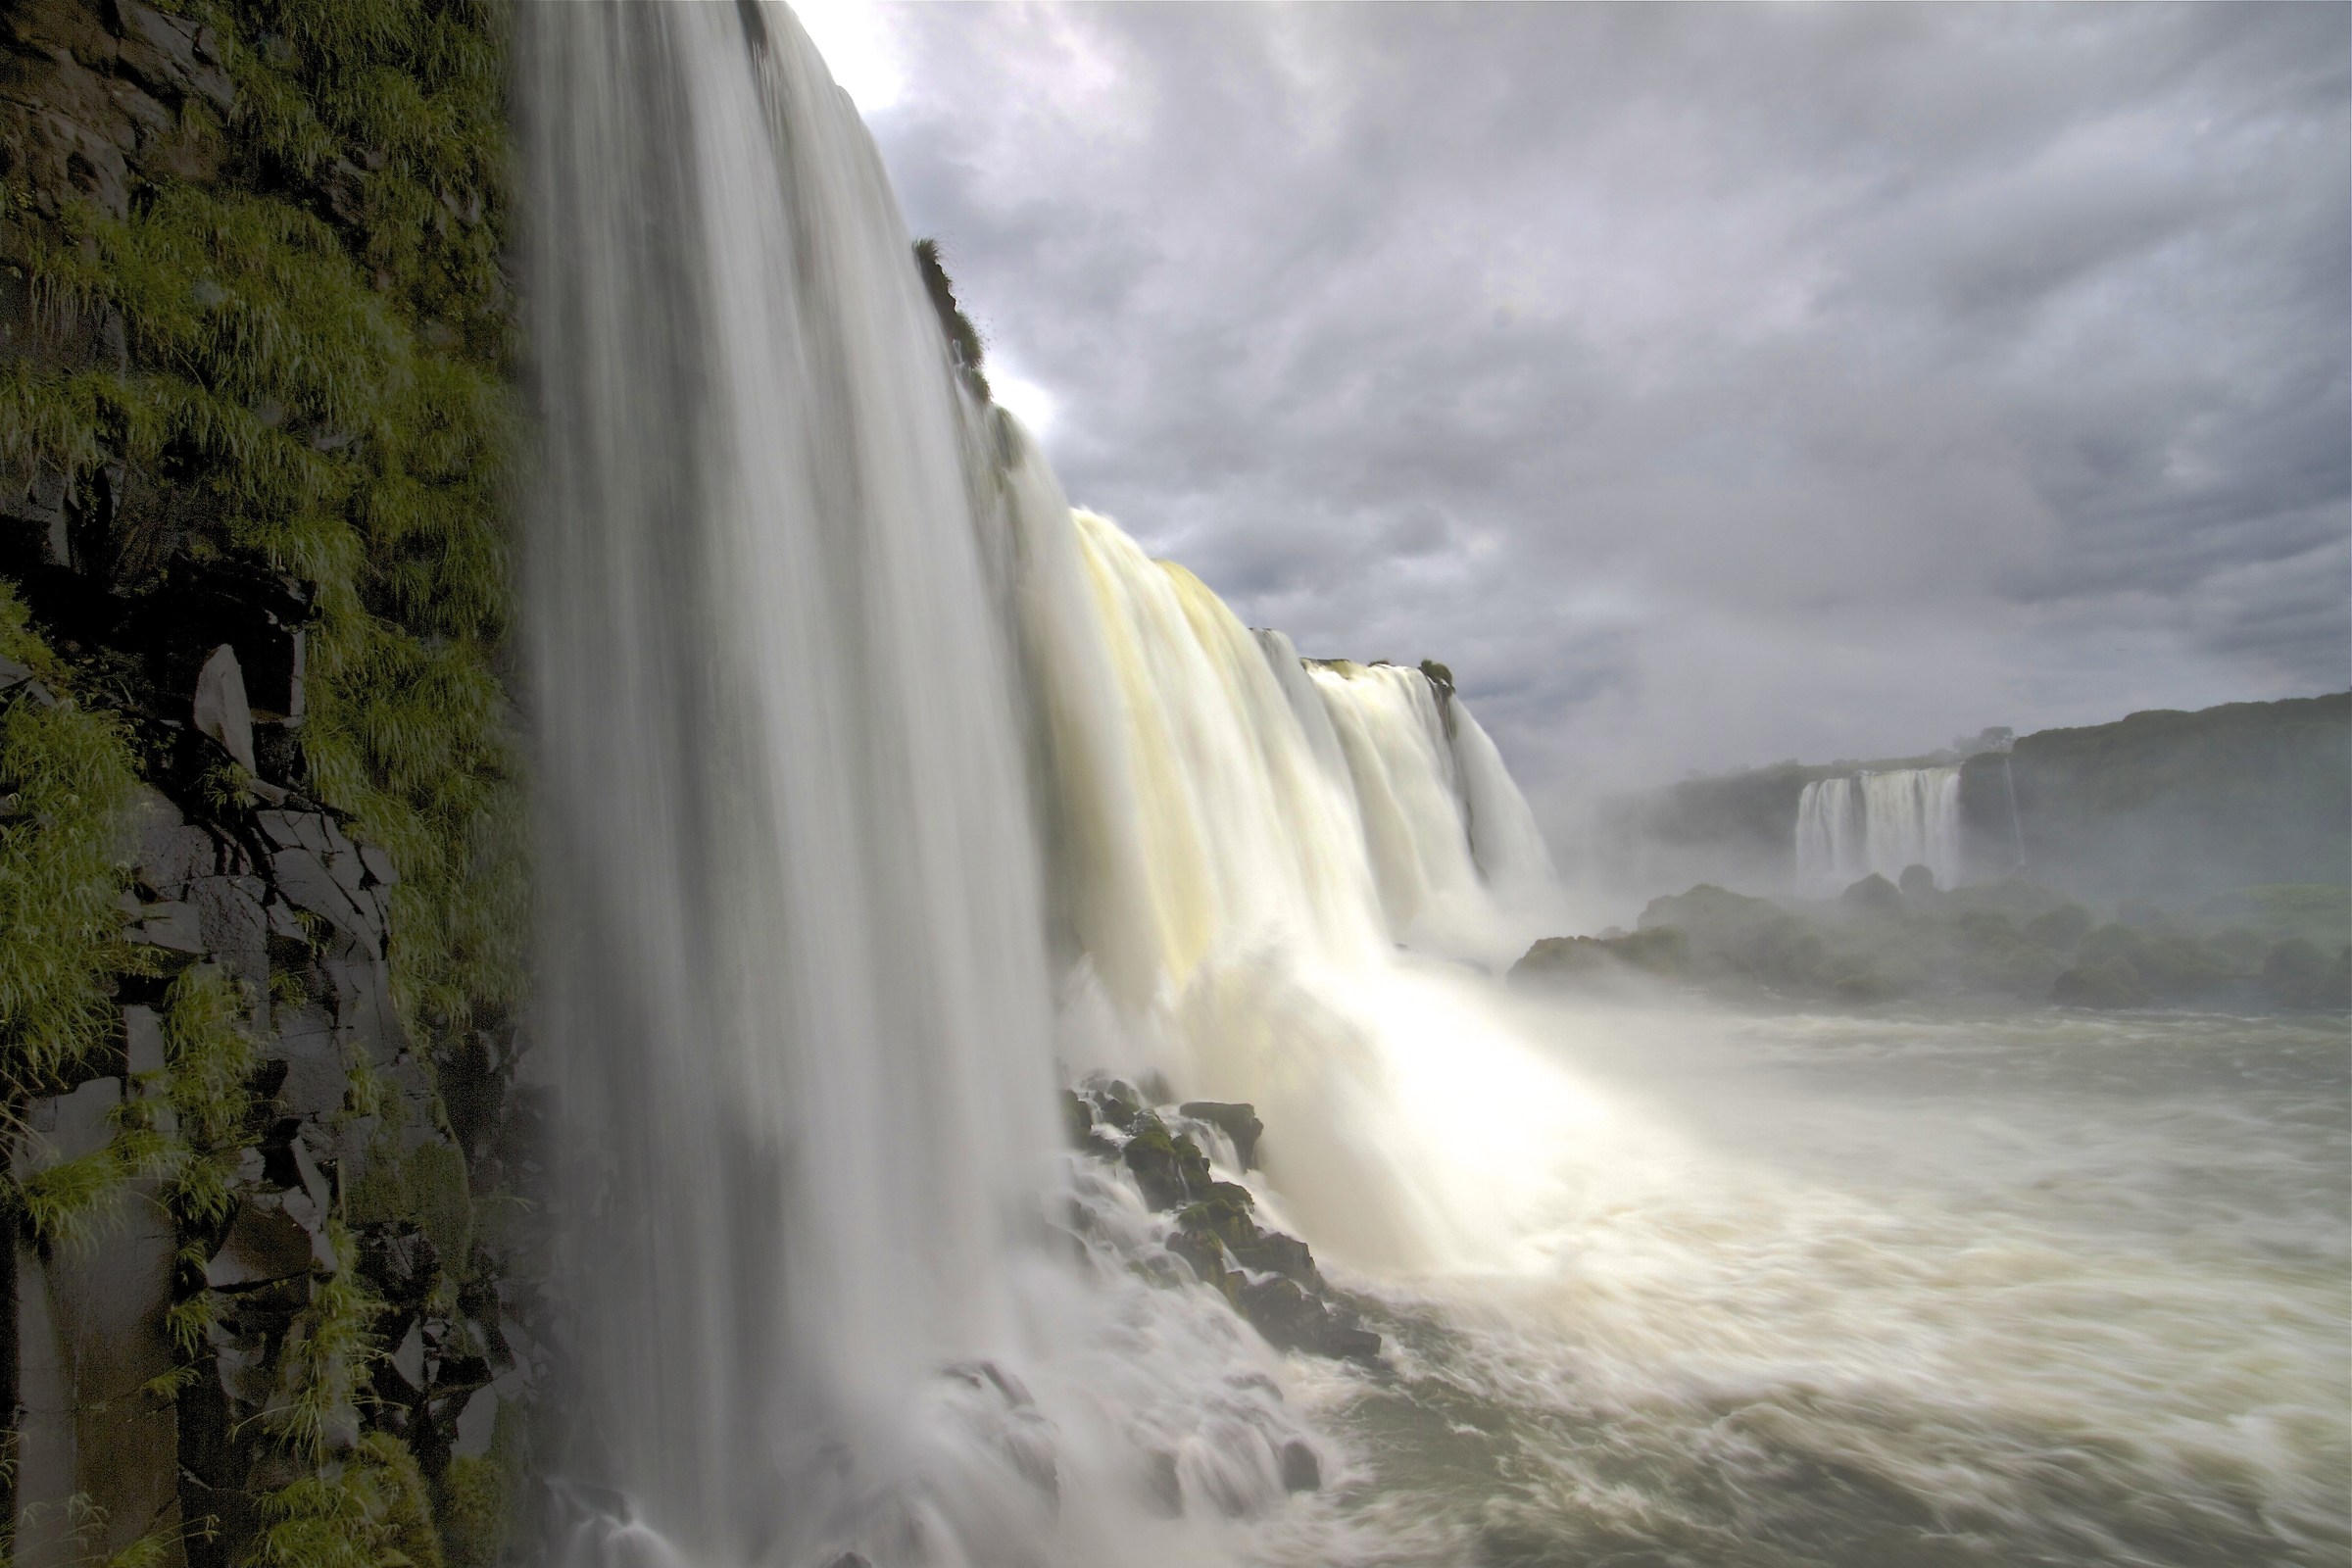 Iguazu falls on the Brazilian side...